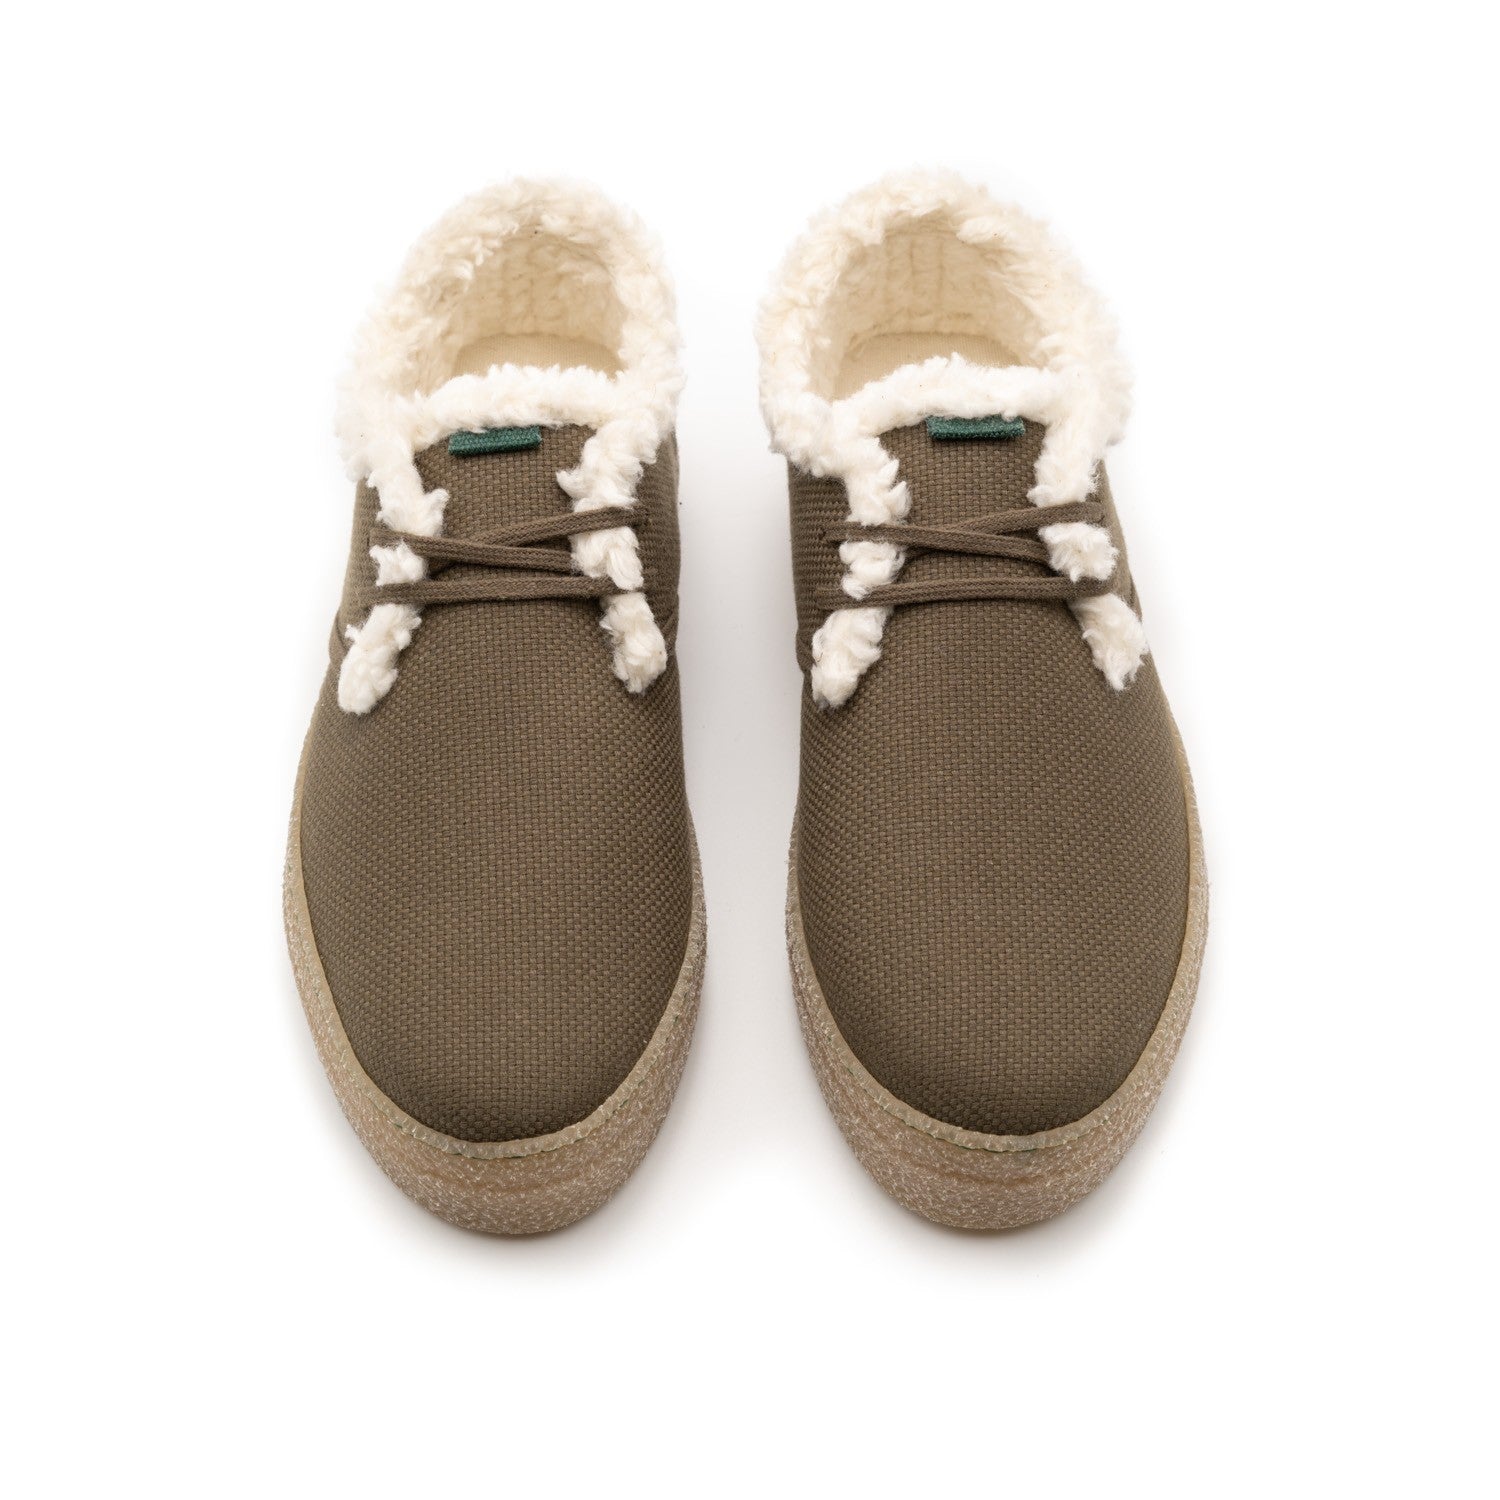 Vegan winter shoe of recycled cotton khaki - VESICA PISCIS FOOTWEAR